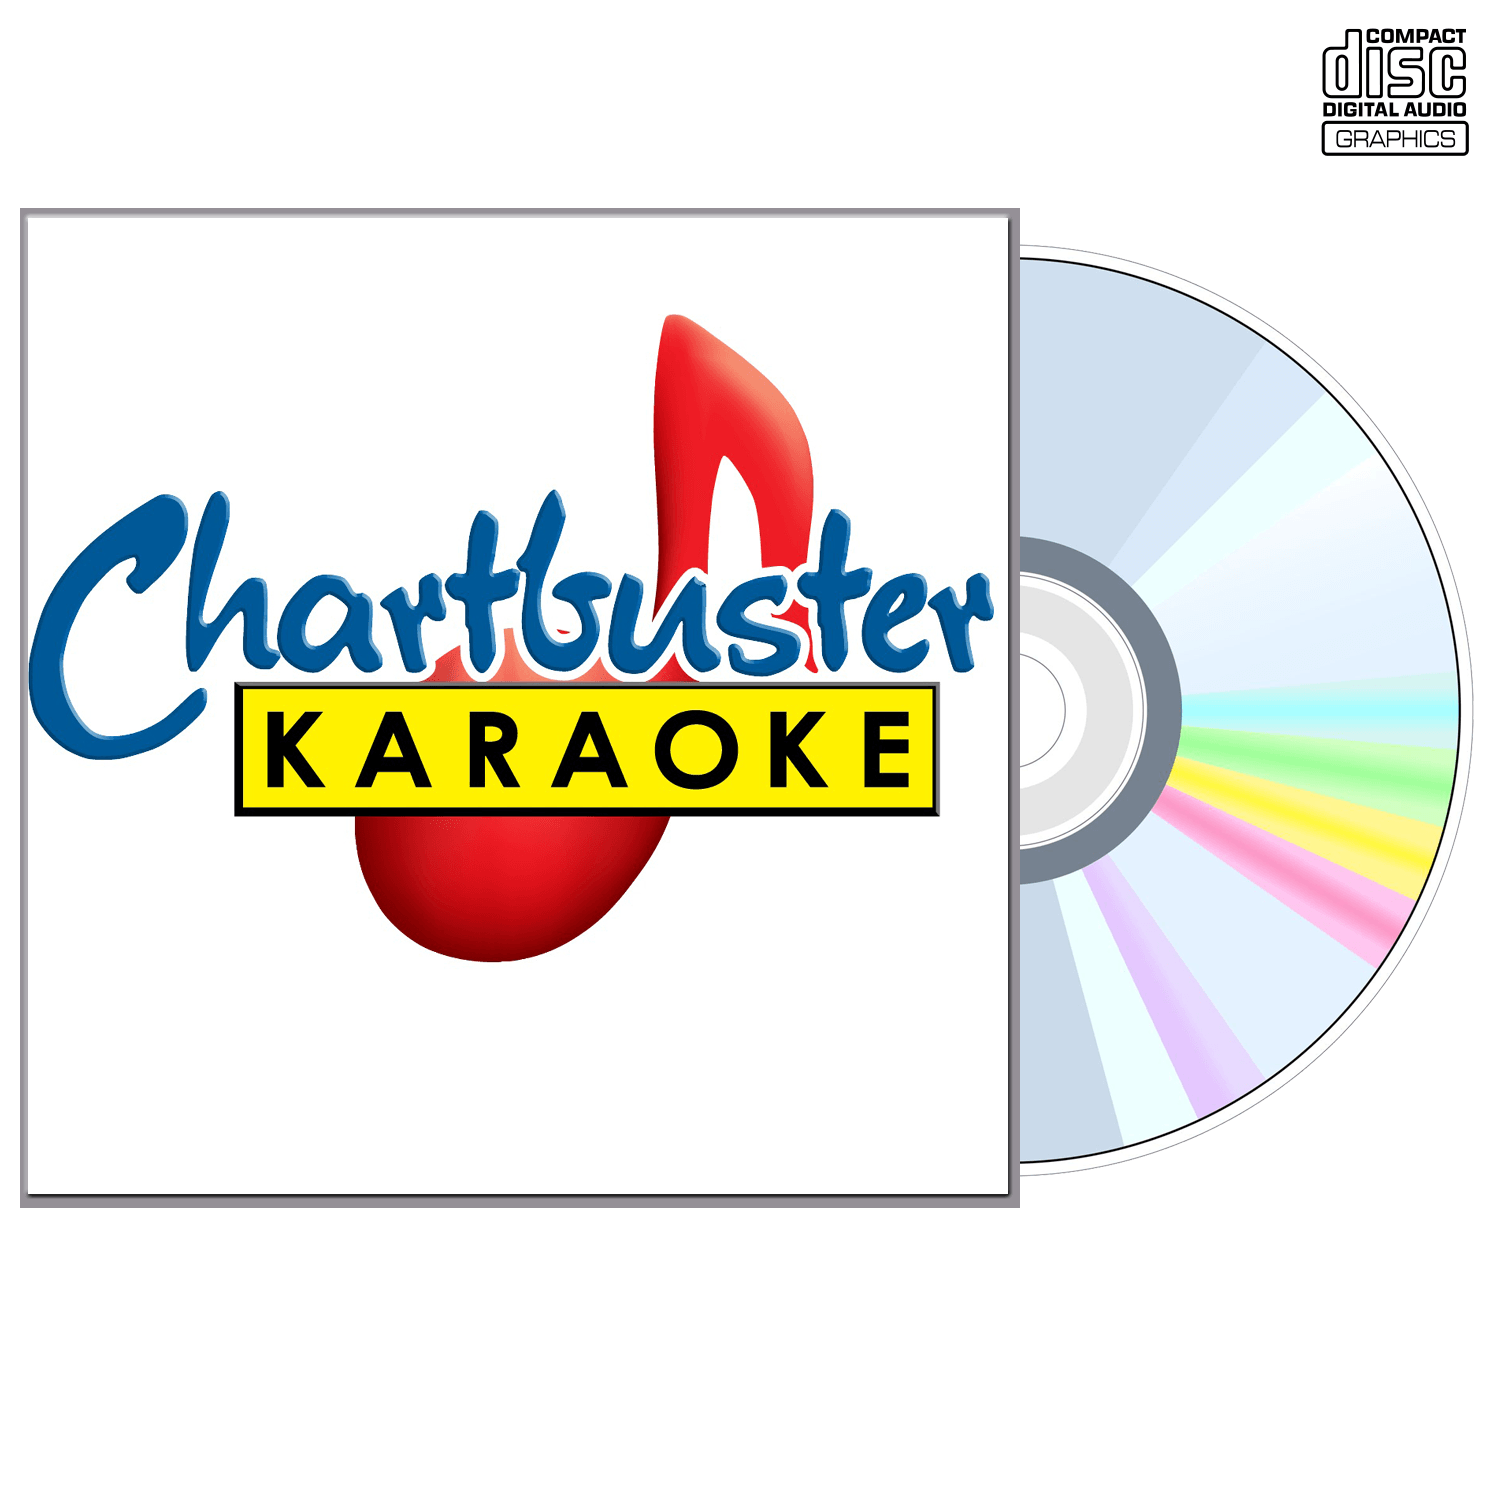 Mariah Carey Vol 1 - CD+G - Chartbuster Karaoke - Karaoke Home Entertainment